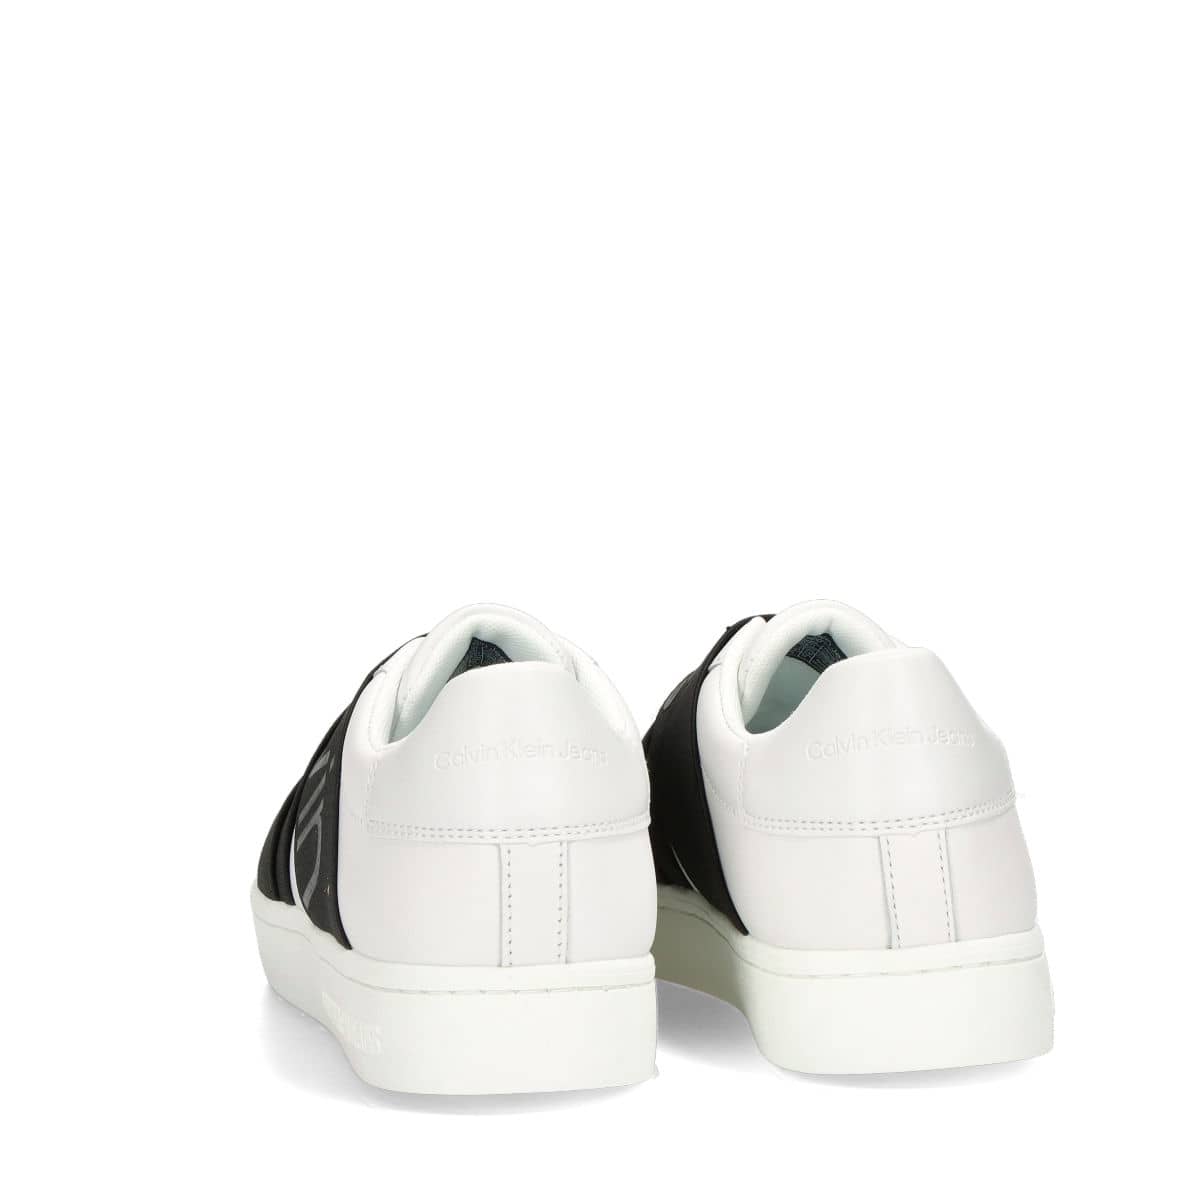 Calvin Klein women's stylish sneaker - white | Robel.shoes